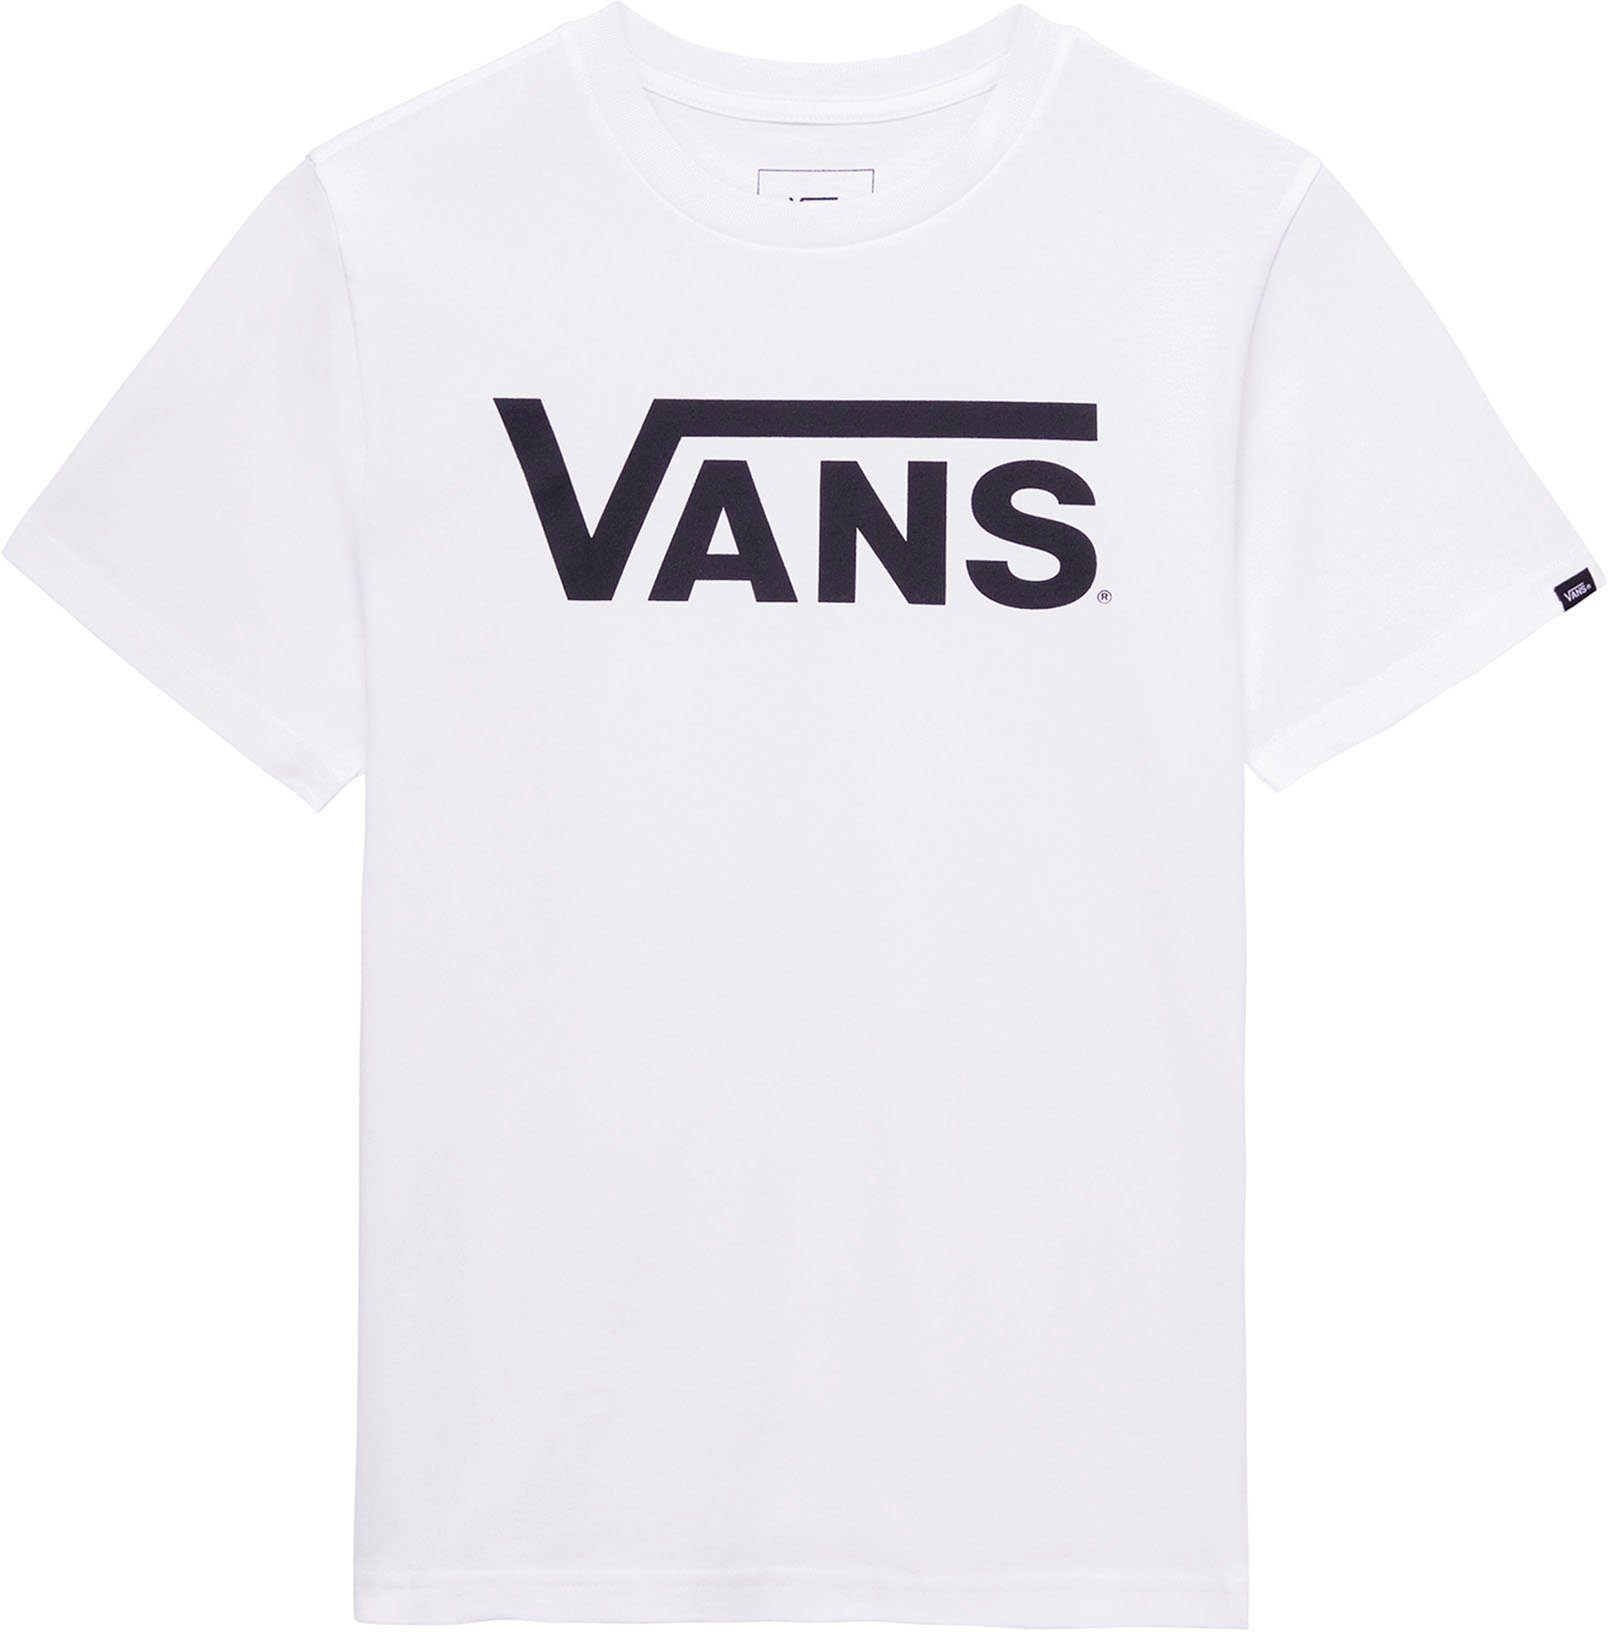 BOYS T-Shirt VANS Vans weiß CLASSIC